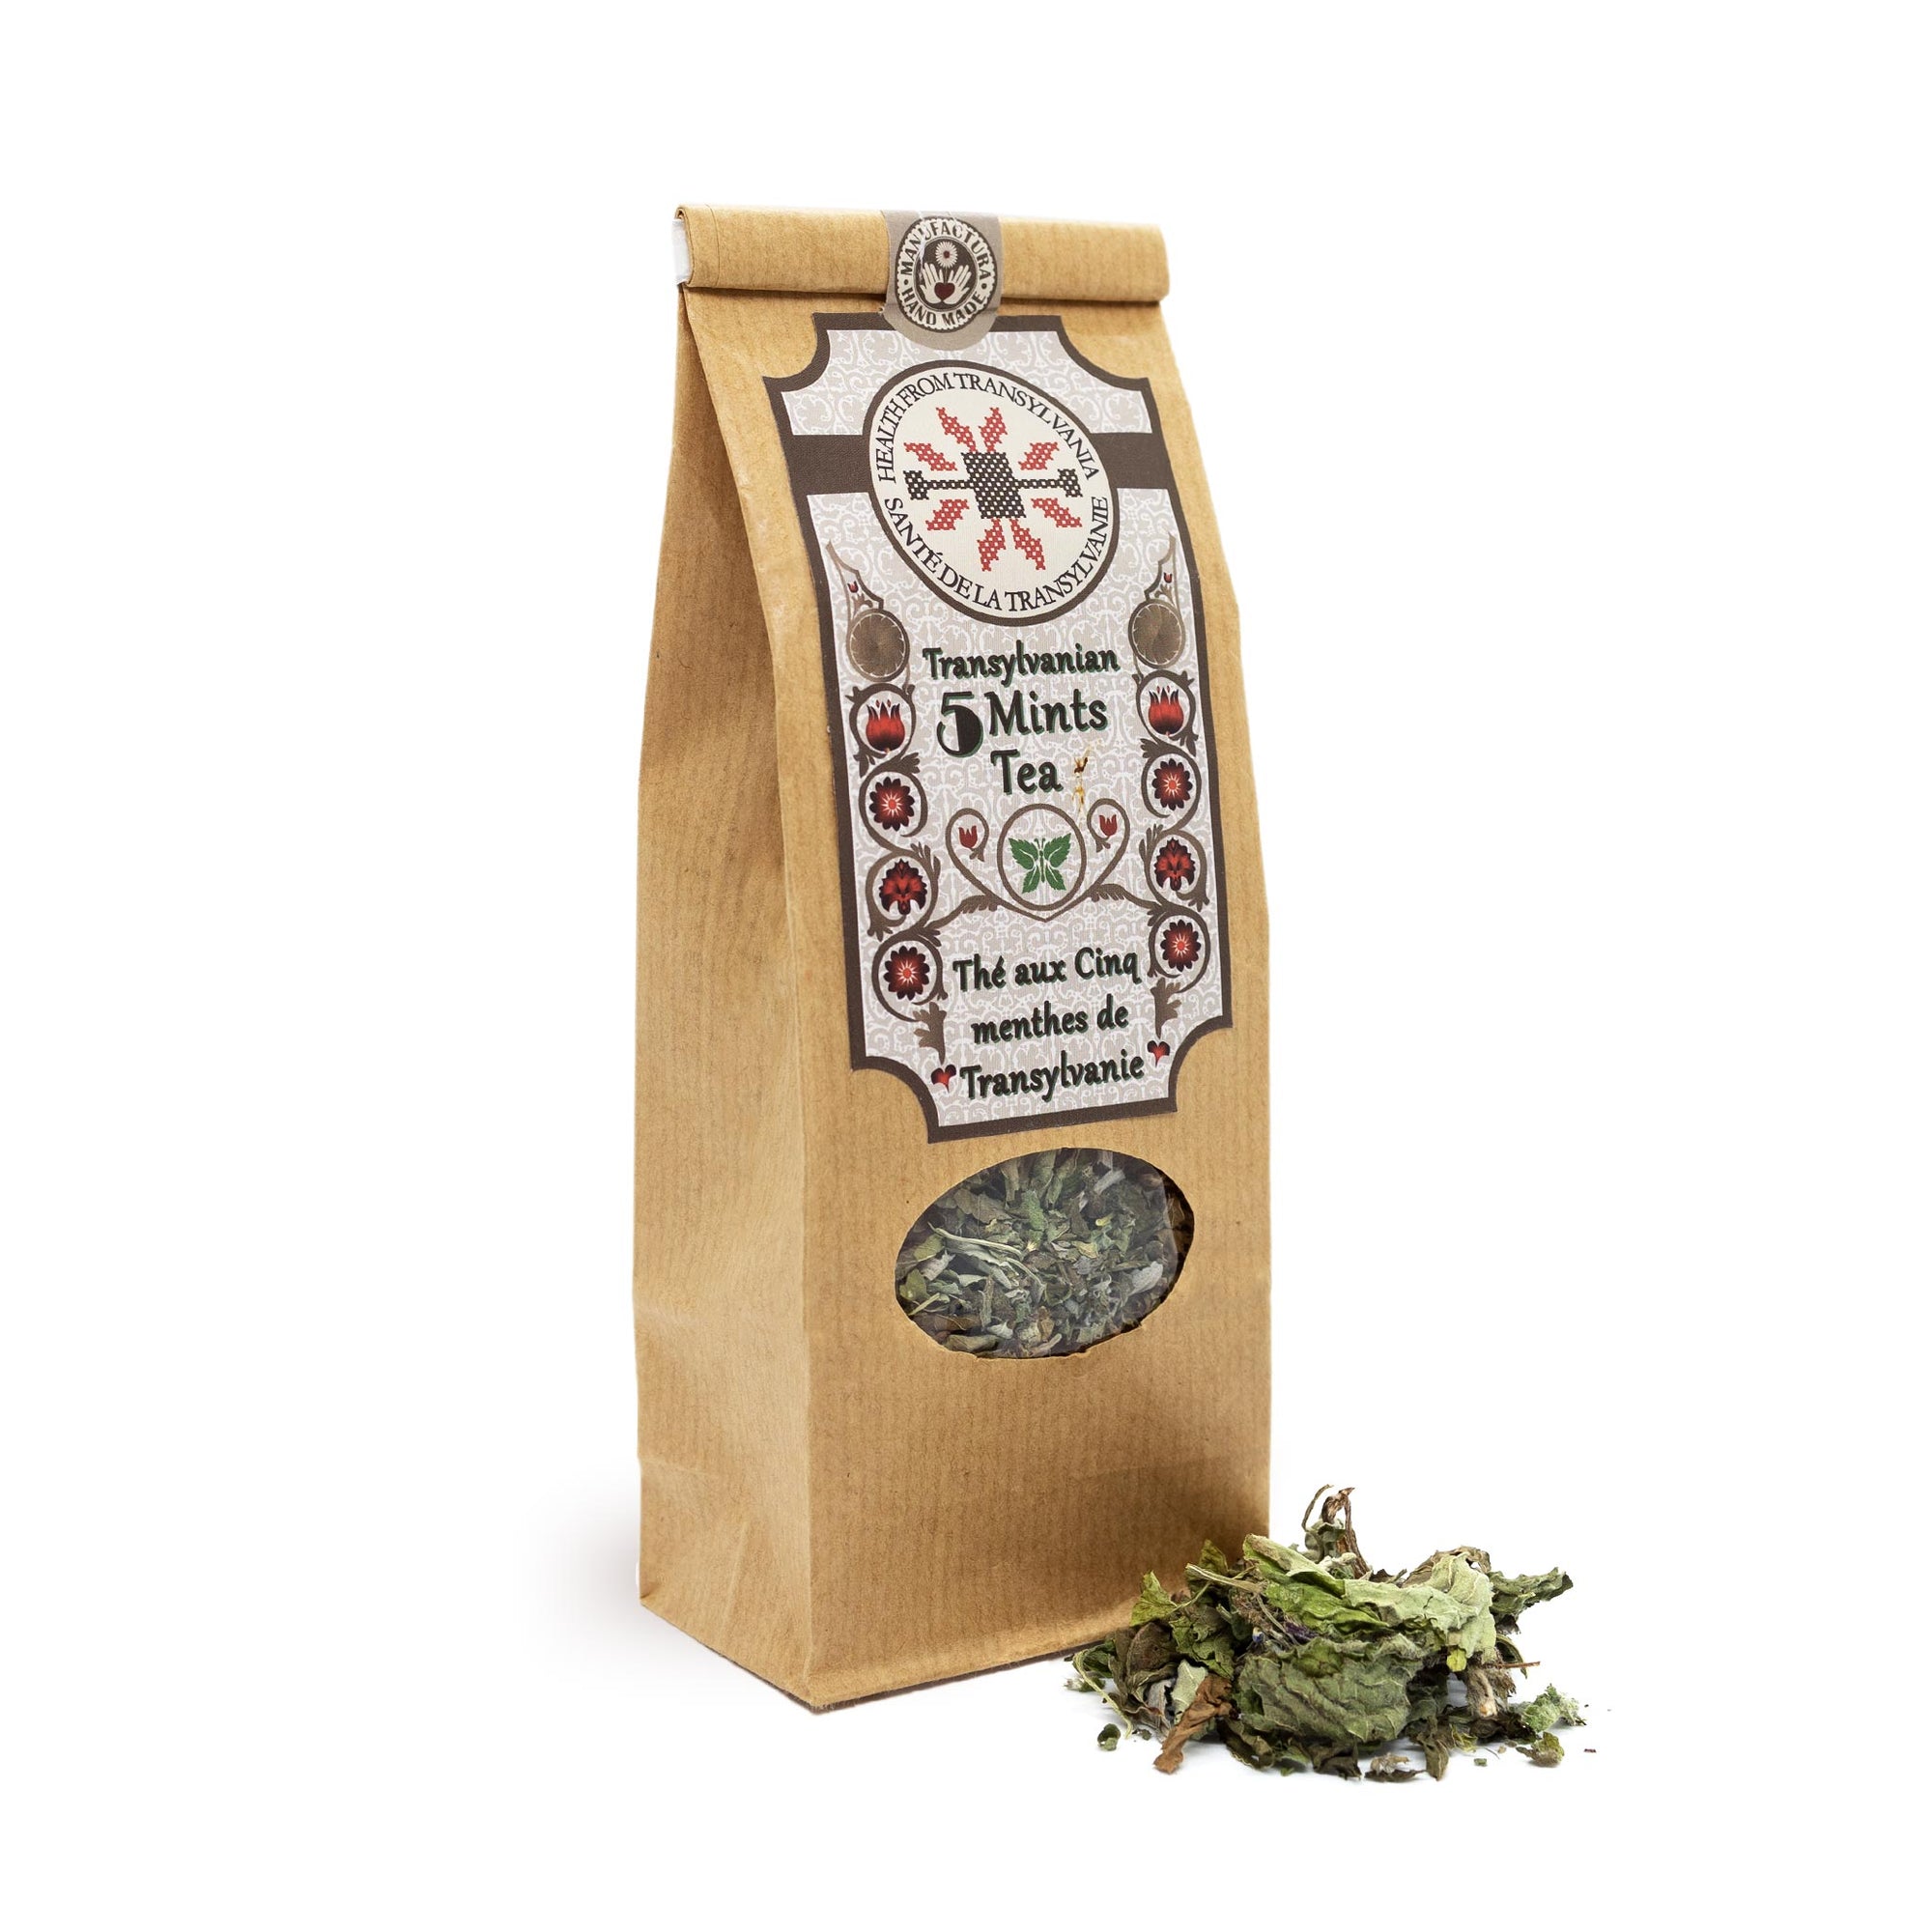 Health from Europe Organic 5 Mints herbal tea packet